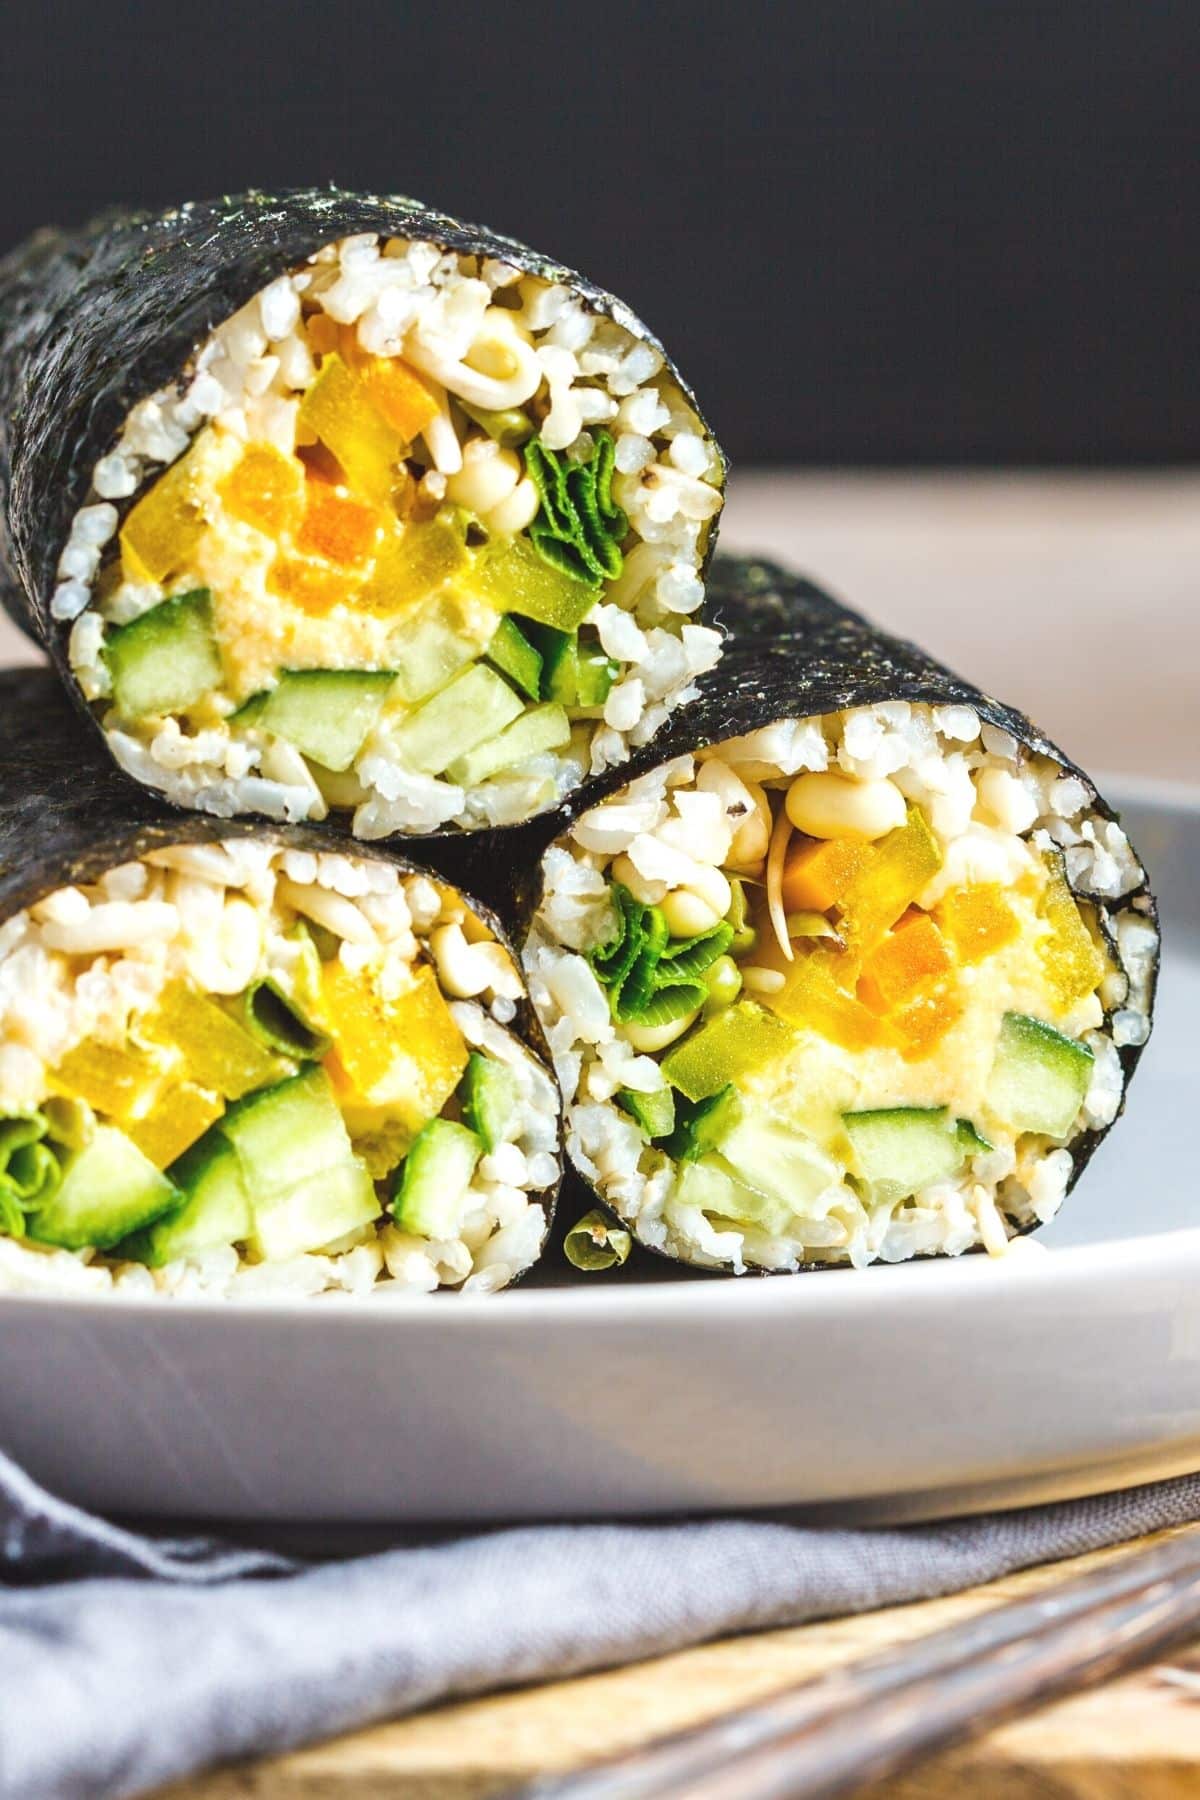 nori wraps with veggies and rice